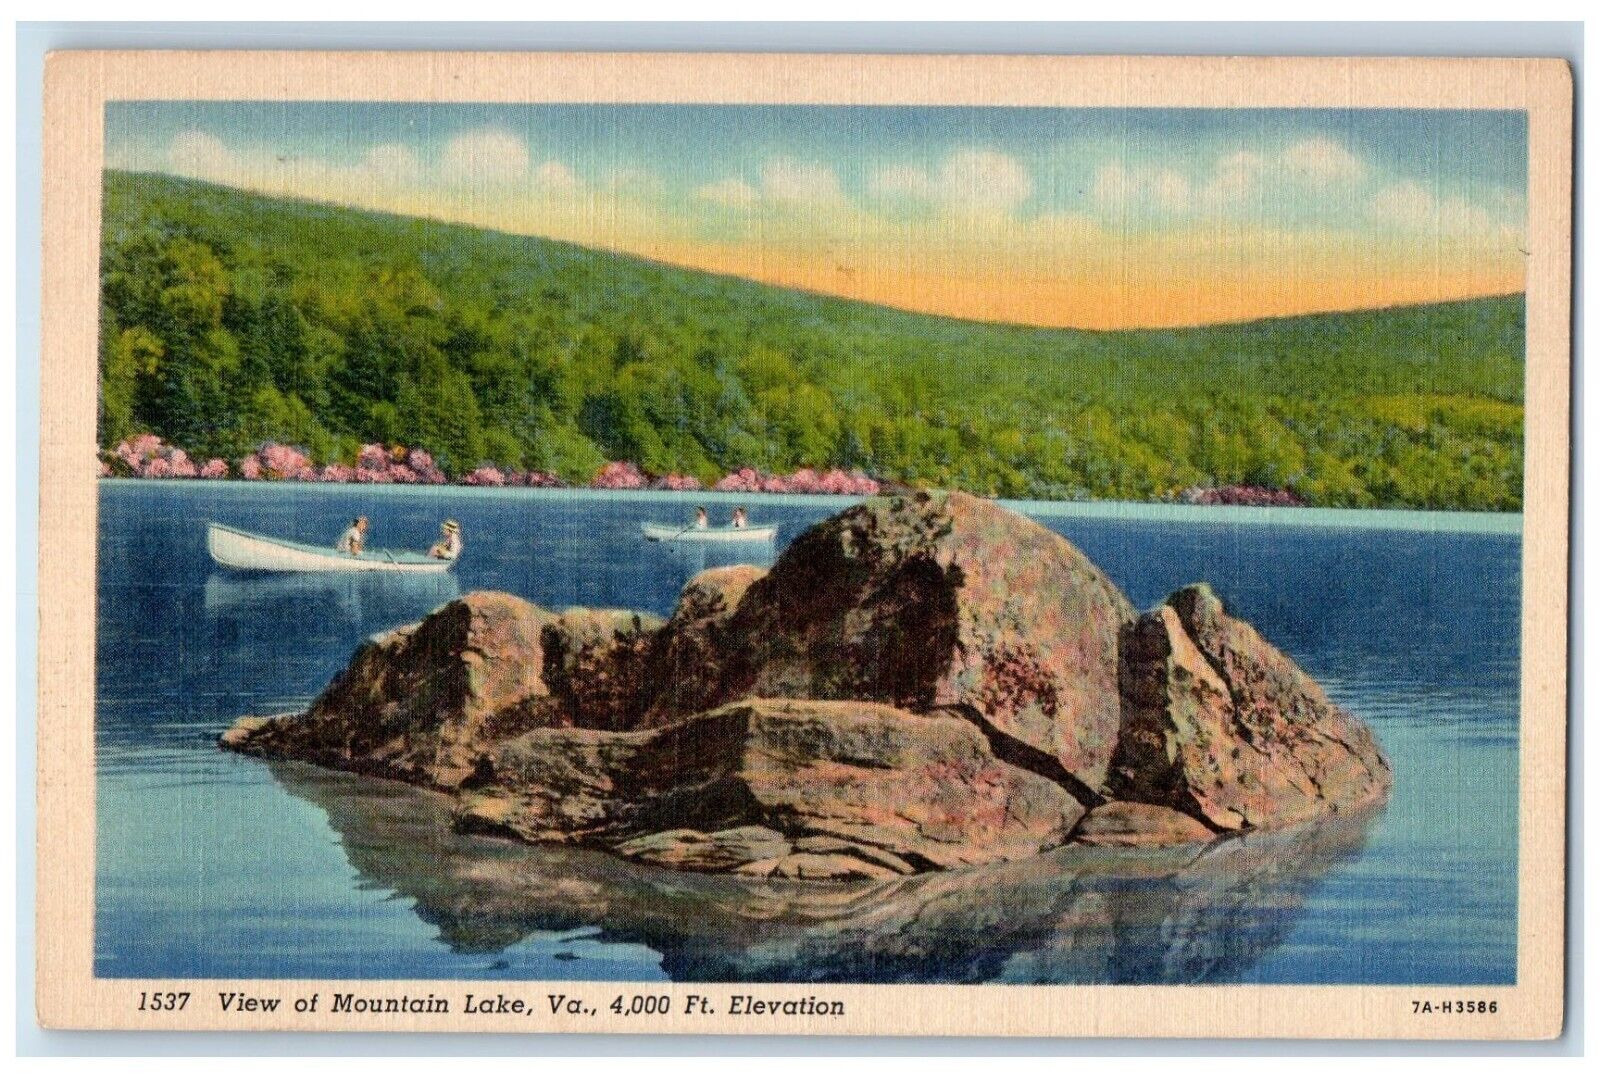 c1940 View Mountain Lake Canoeing Big Rock Virginia VA Vintage Antique Postcard